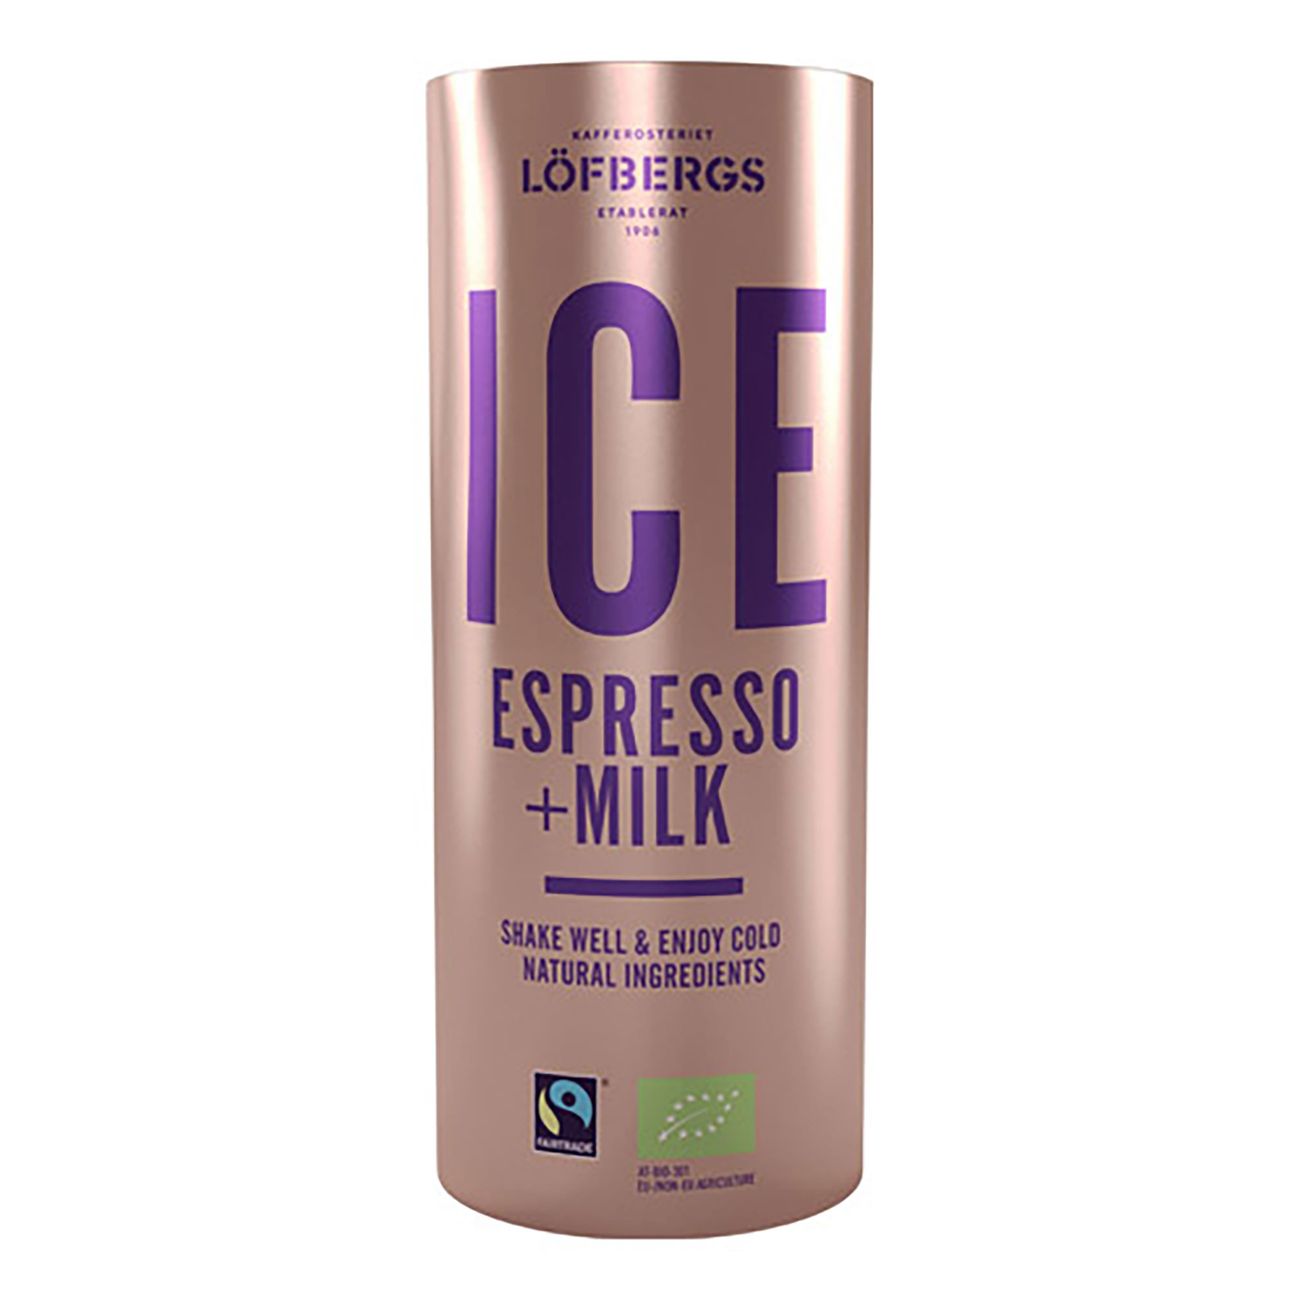 ice-espresso-230ml-86243-1